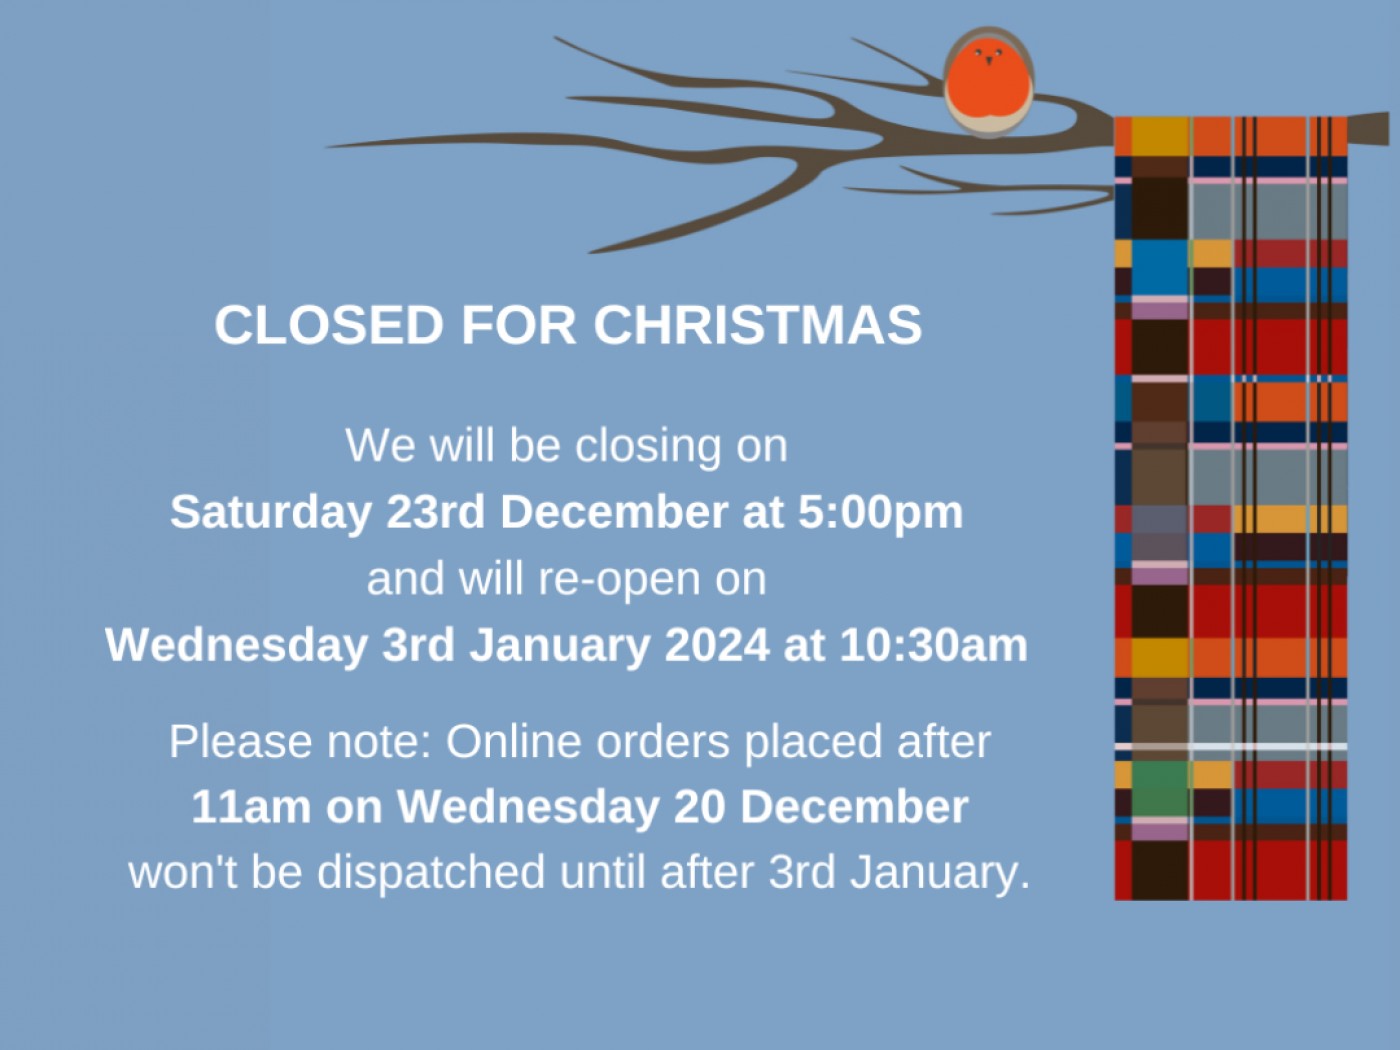 Christmas Closure Dates